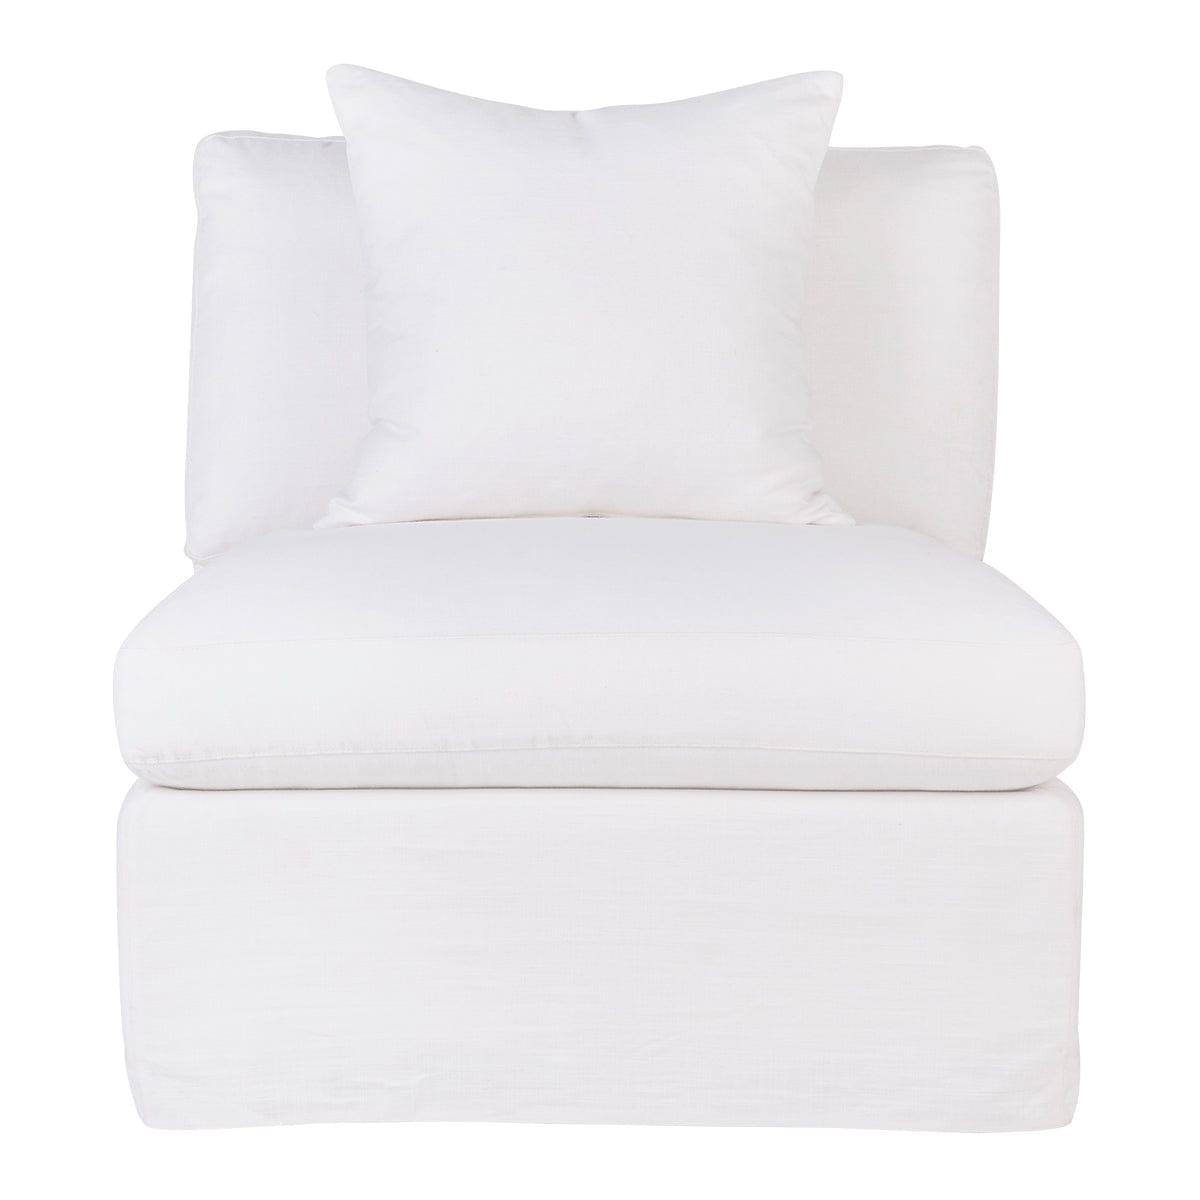 House Journey Birkshire Slip Cover Occasional Chair - White Linen